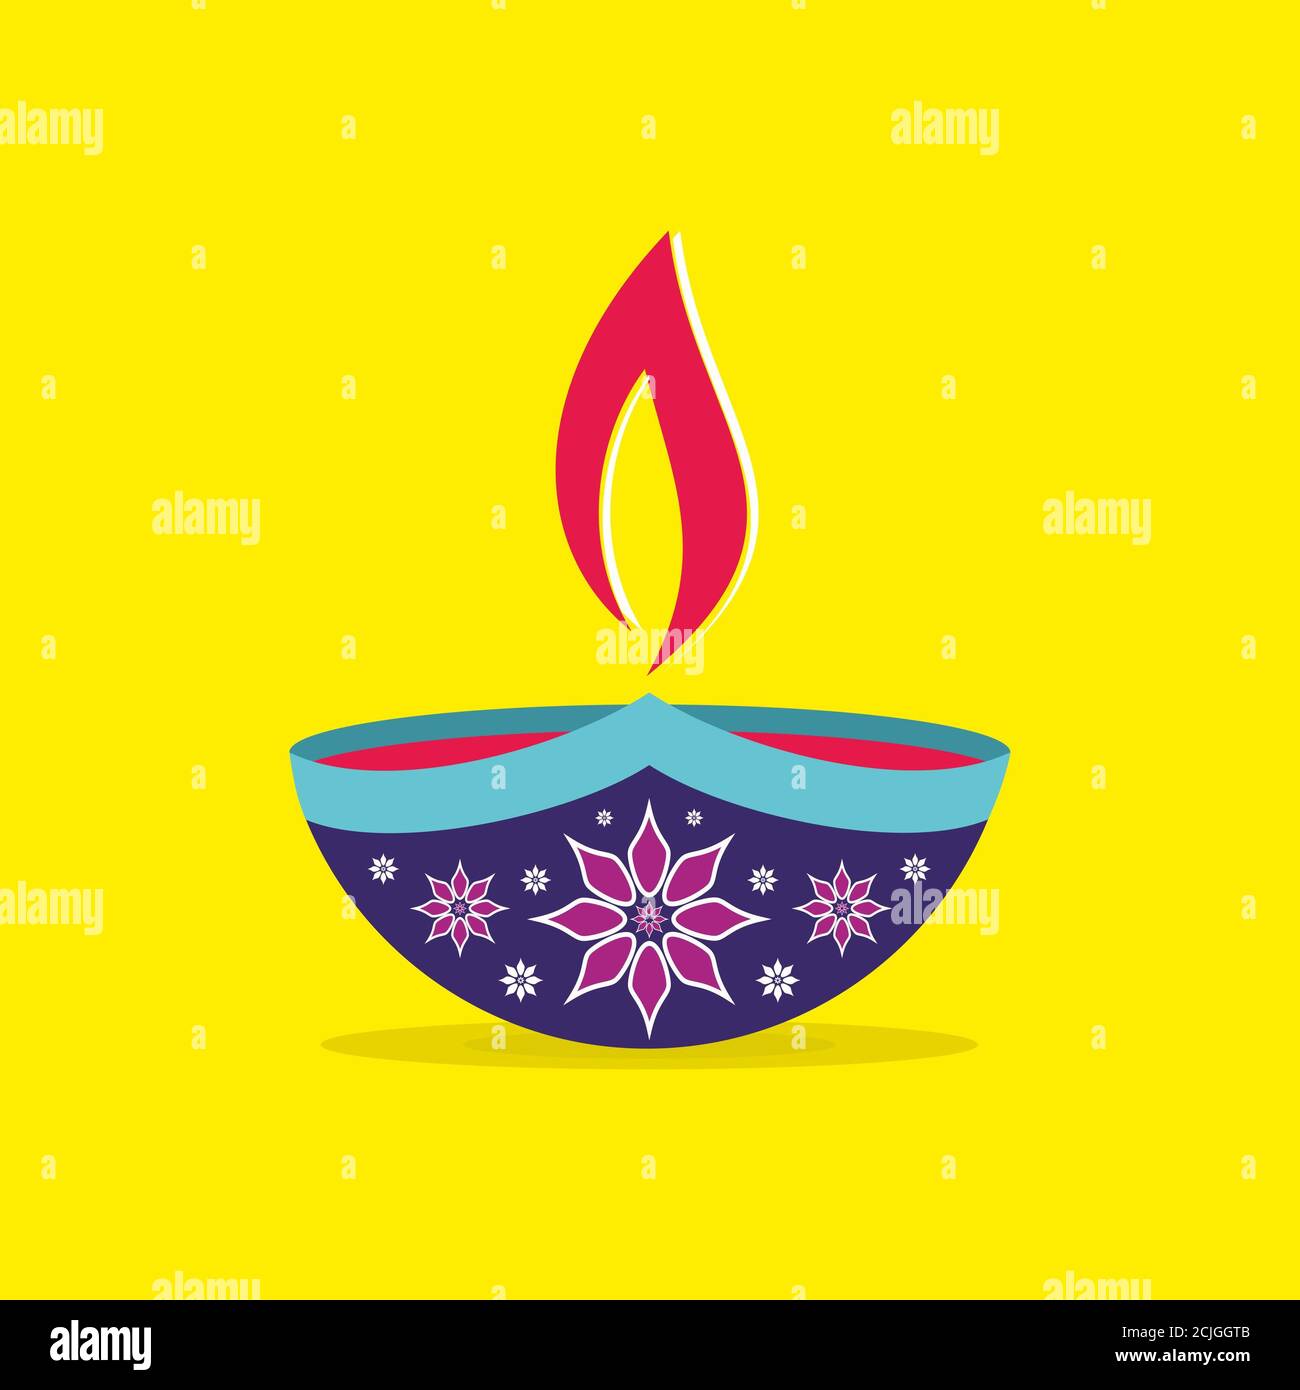 Diwali Diya or Lamp - Vector on Yellow Background Stock Photo - Alamy